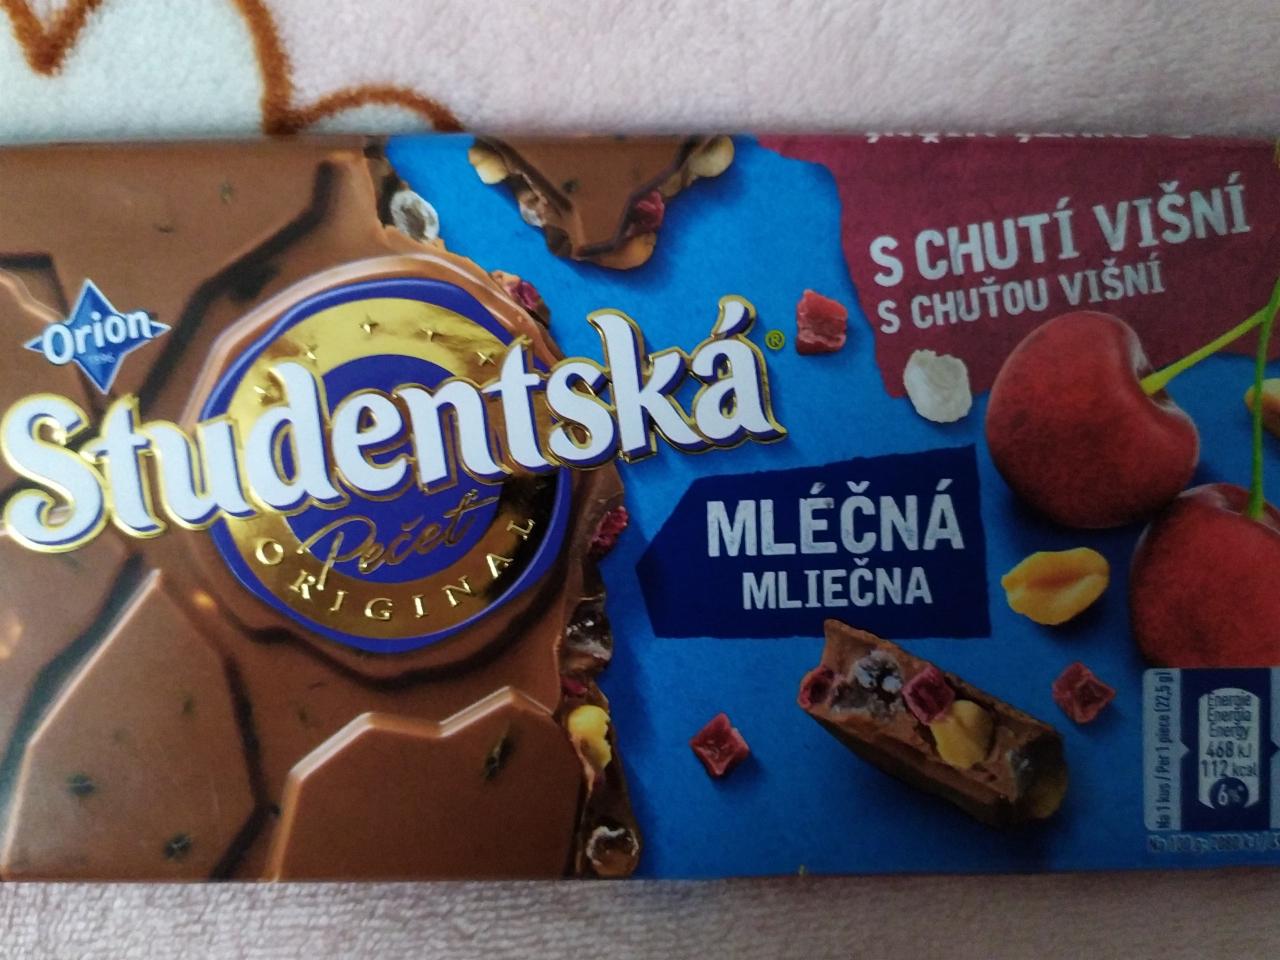 Фото - Шоколад Orion Studentska Pecet mlecna visna (молочна з вишнею)